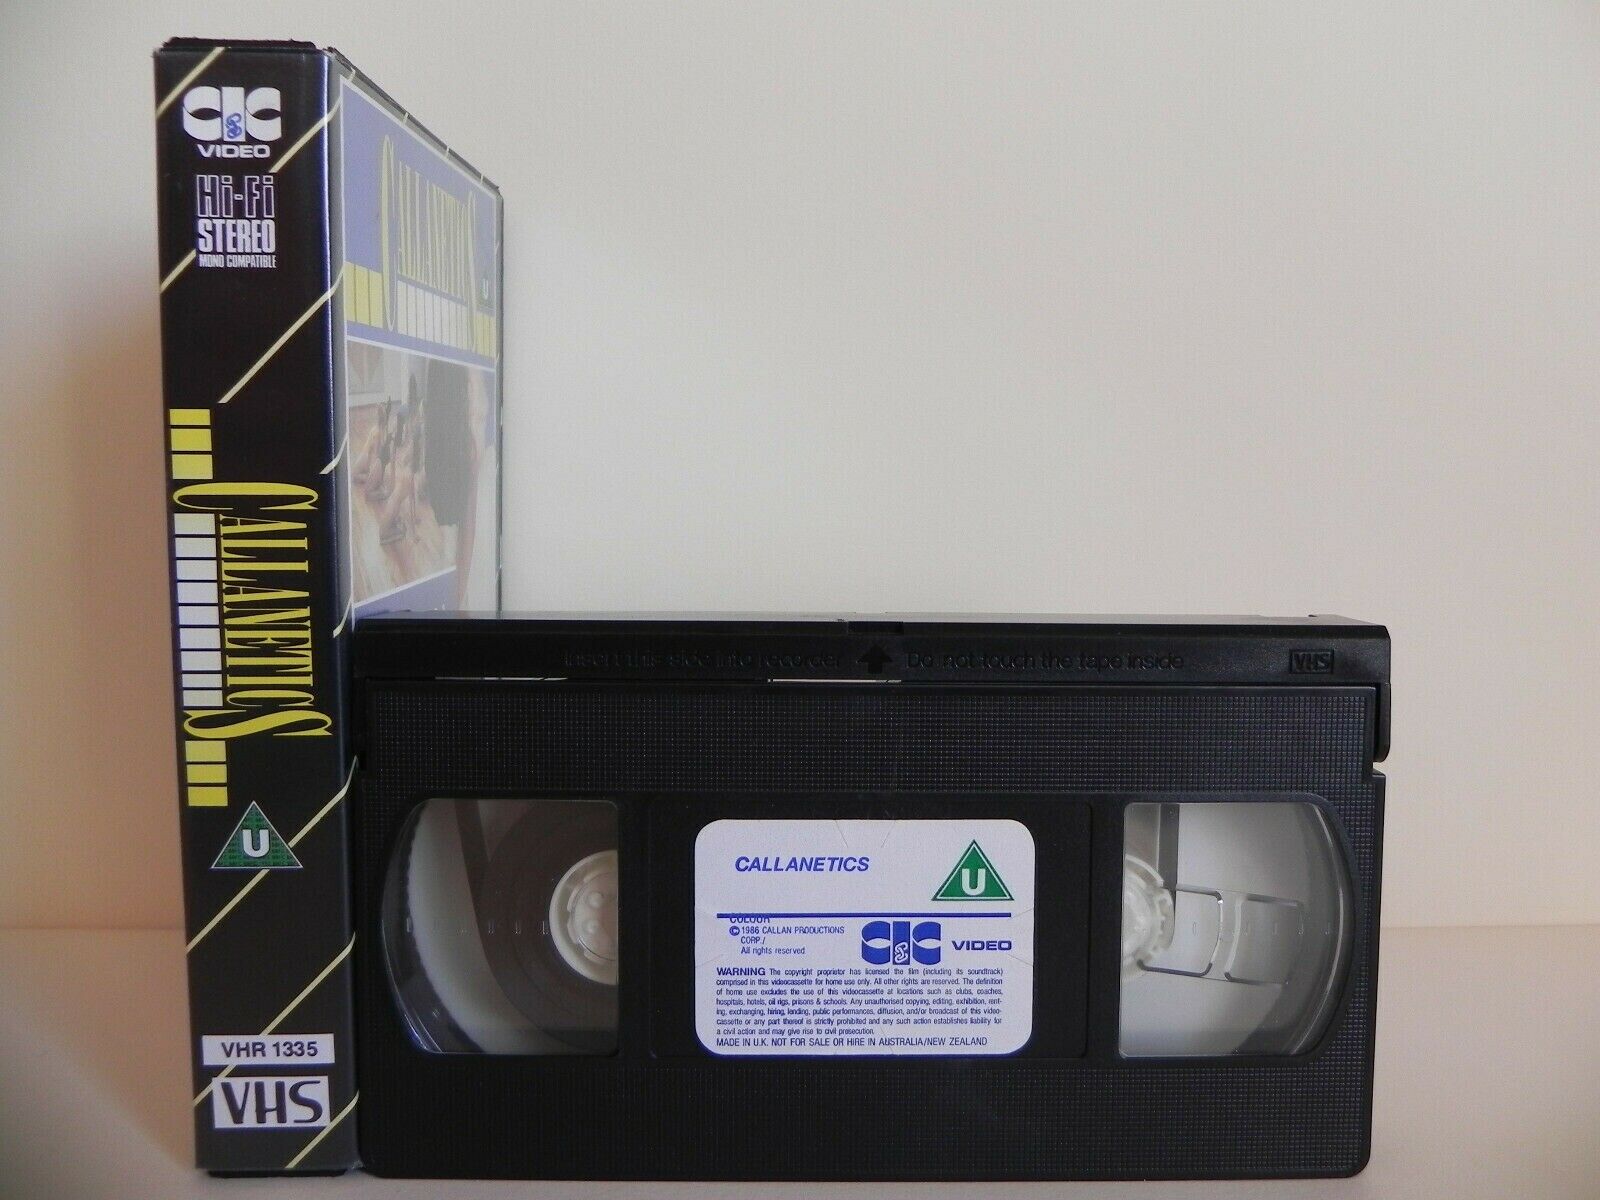 Callanetics: America's No.1 Fintess Video - CIC Video - Callan Pinckey - Pal VHS-